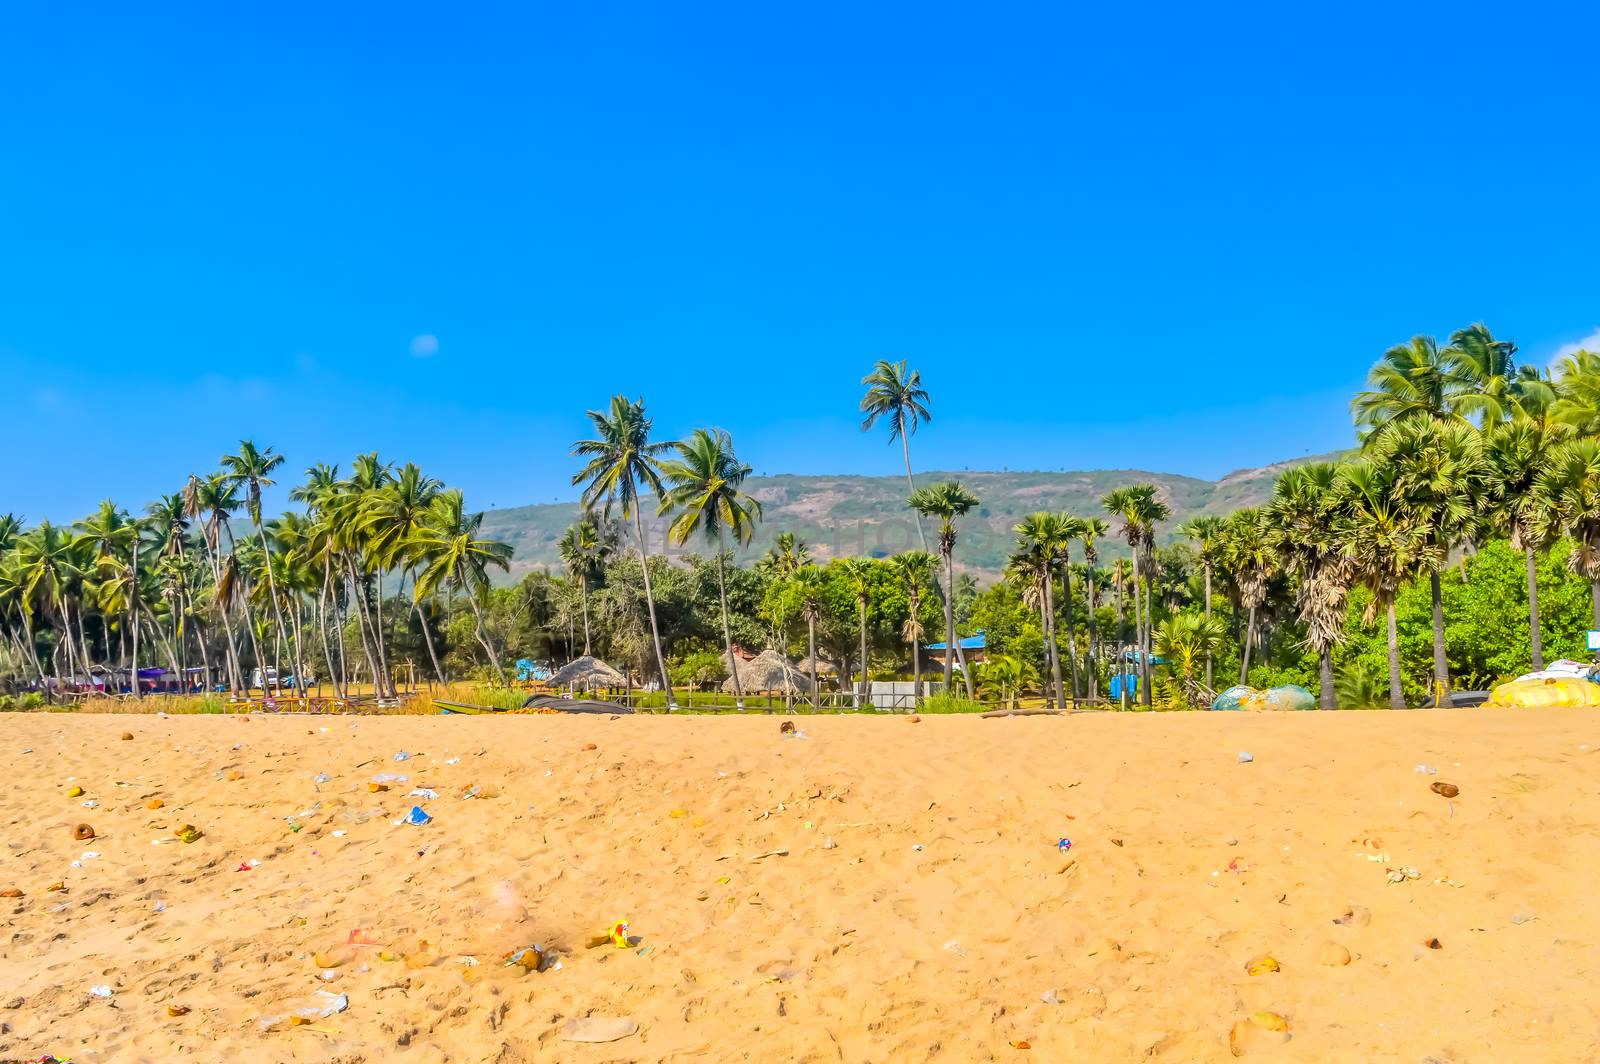 Wild Empty Tropical beach, blue sky, yellow sand, sunlight refle by sudiptabhowmick